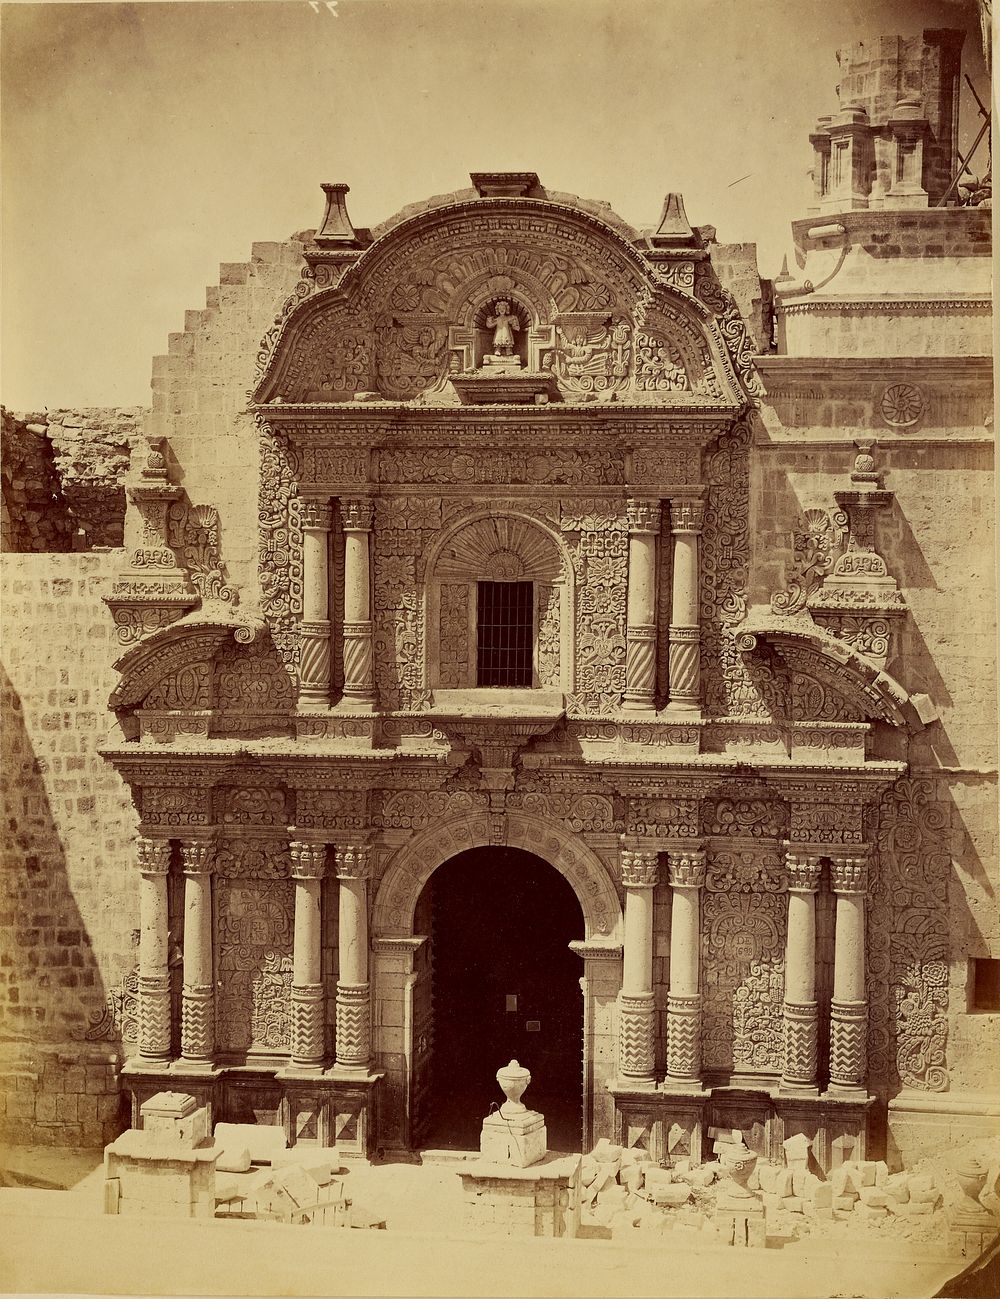 Architectural study, church facade, South America